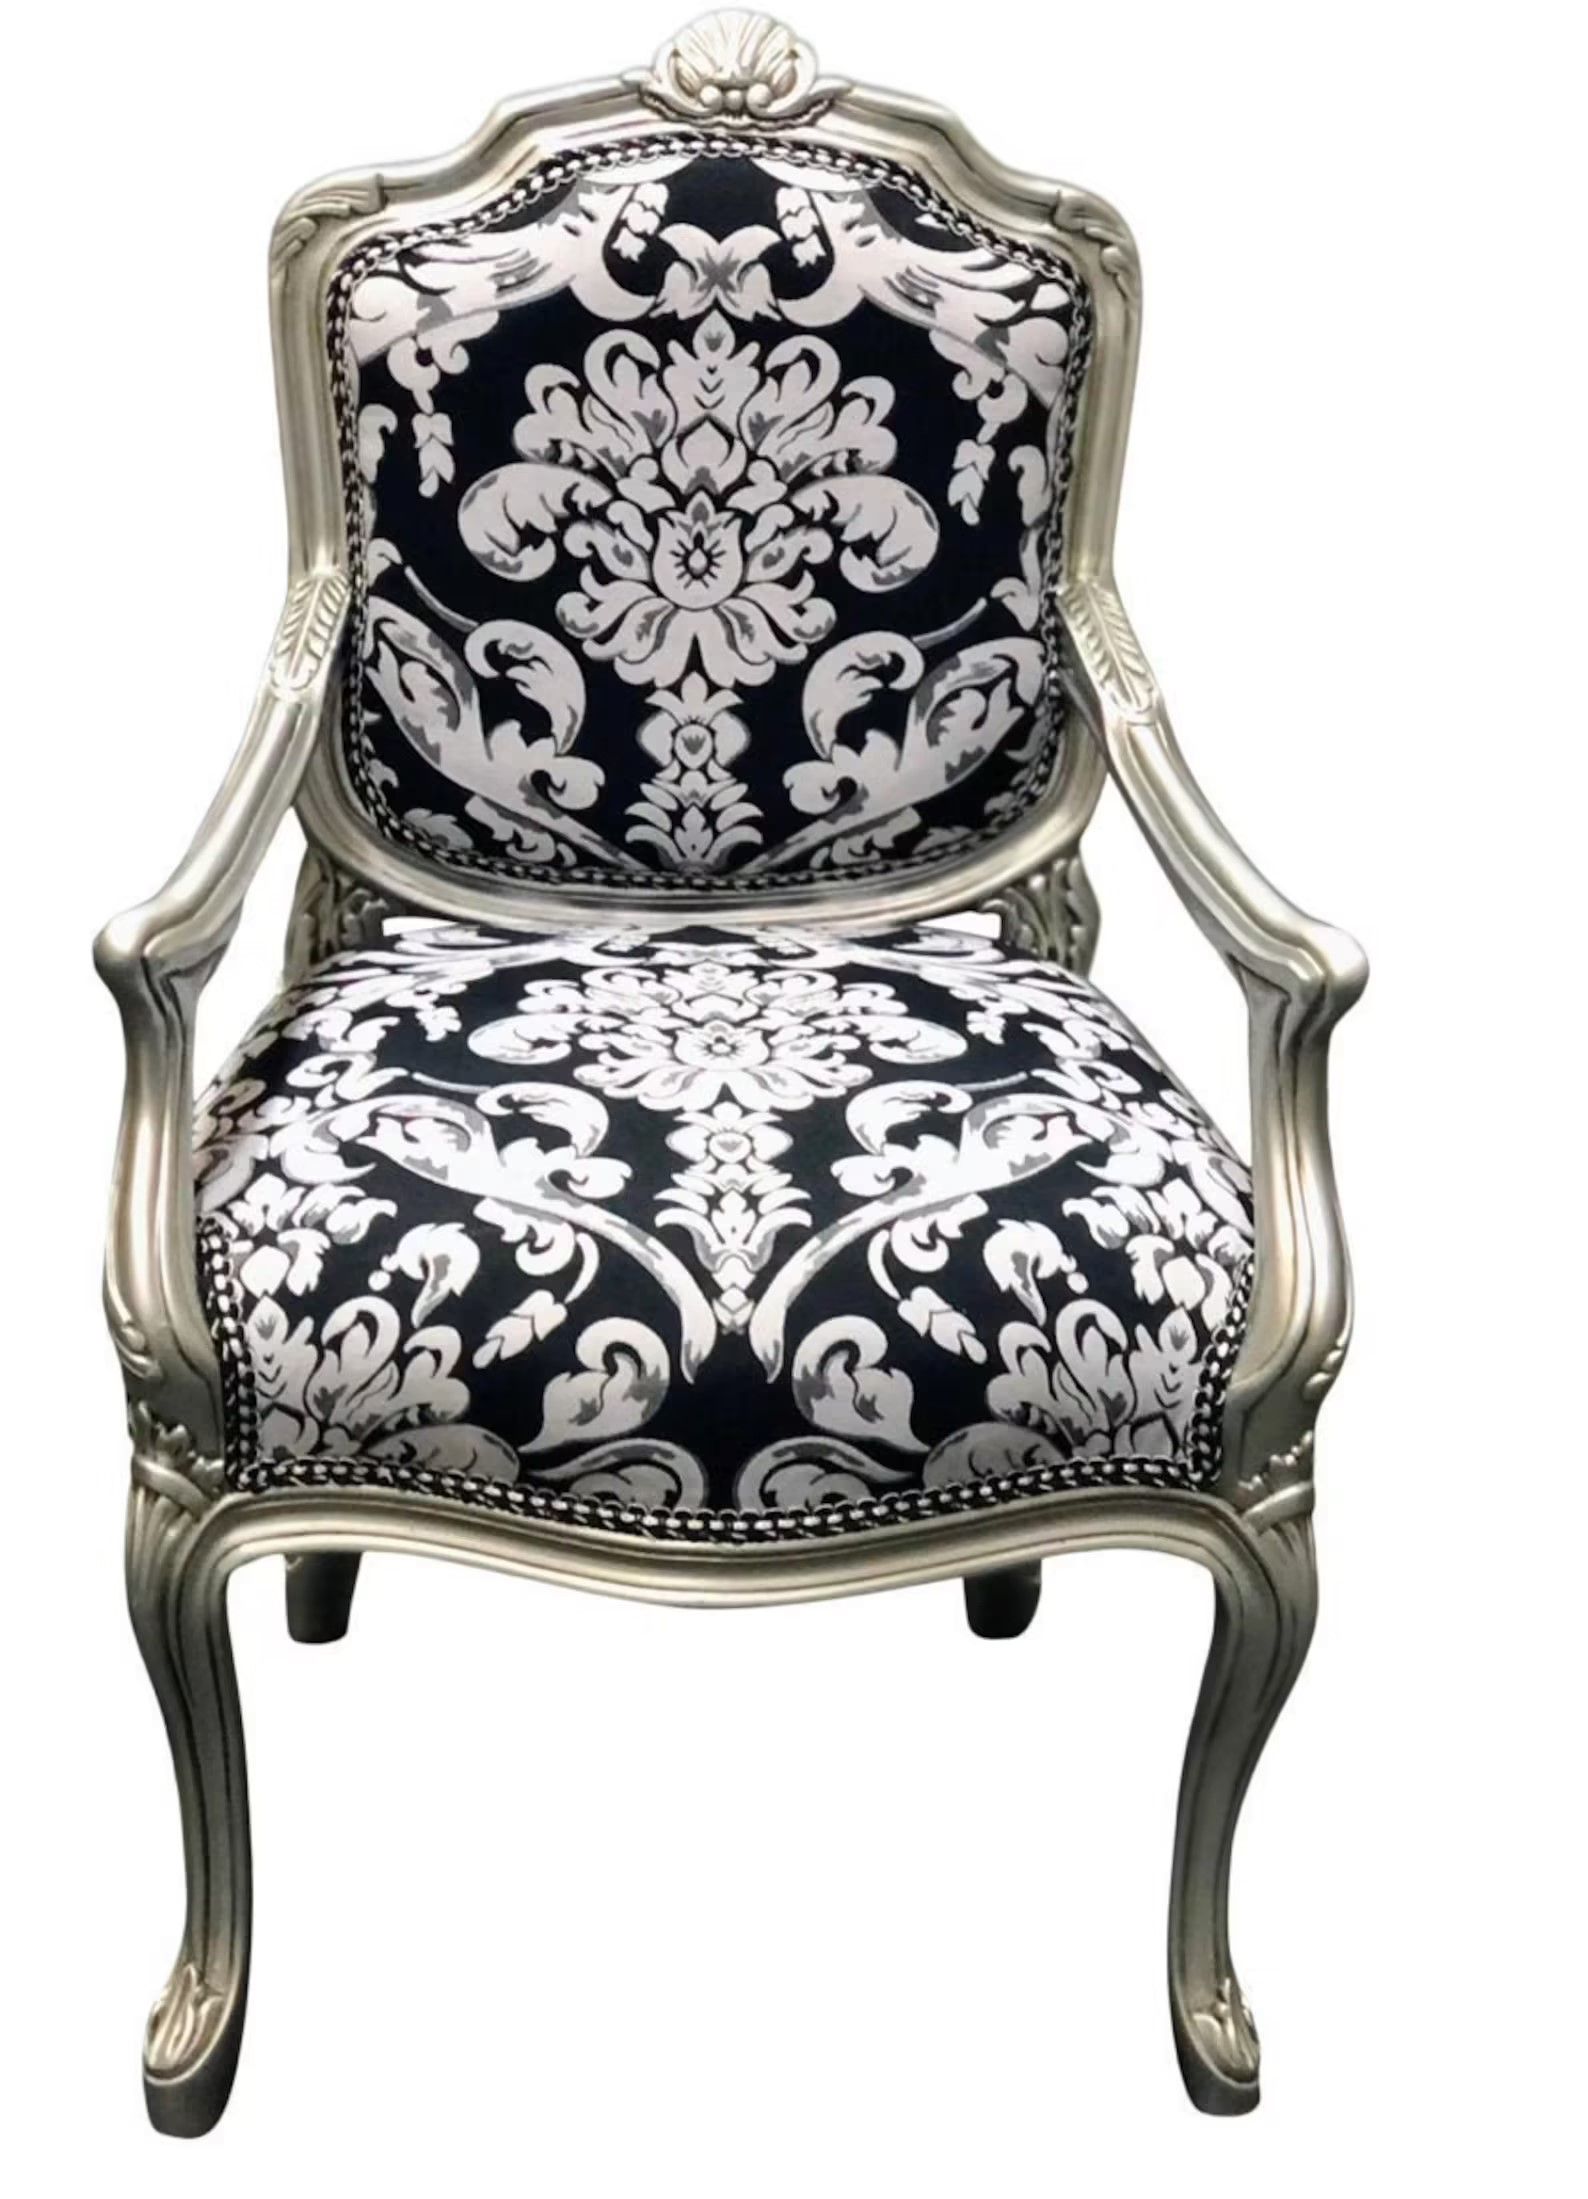 elegant black and white chair with metallic frame